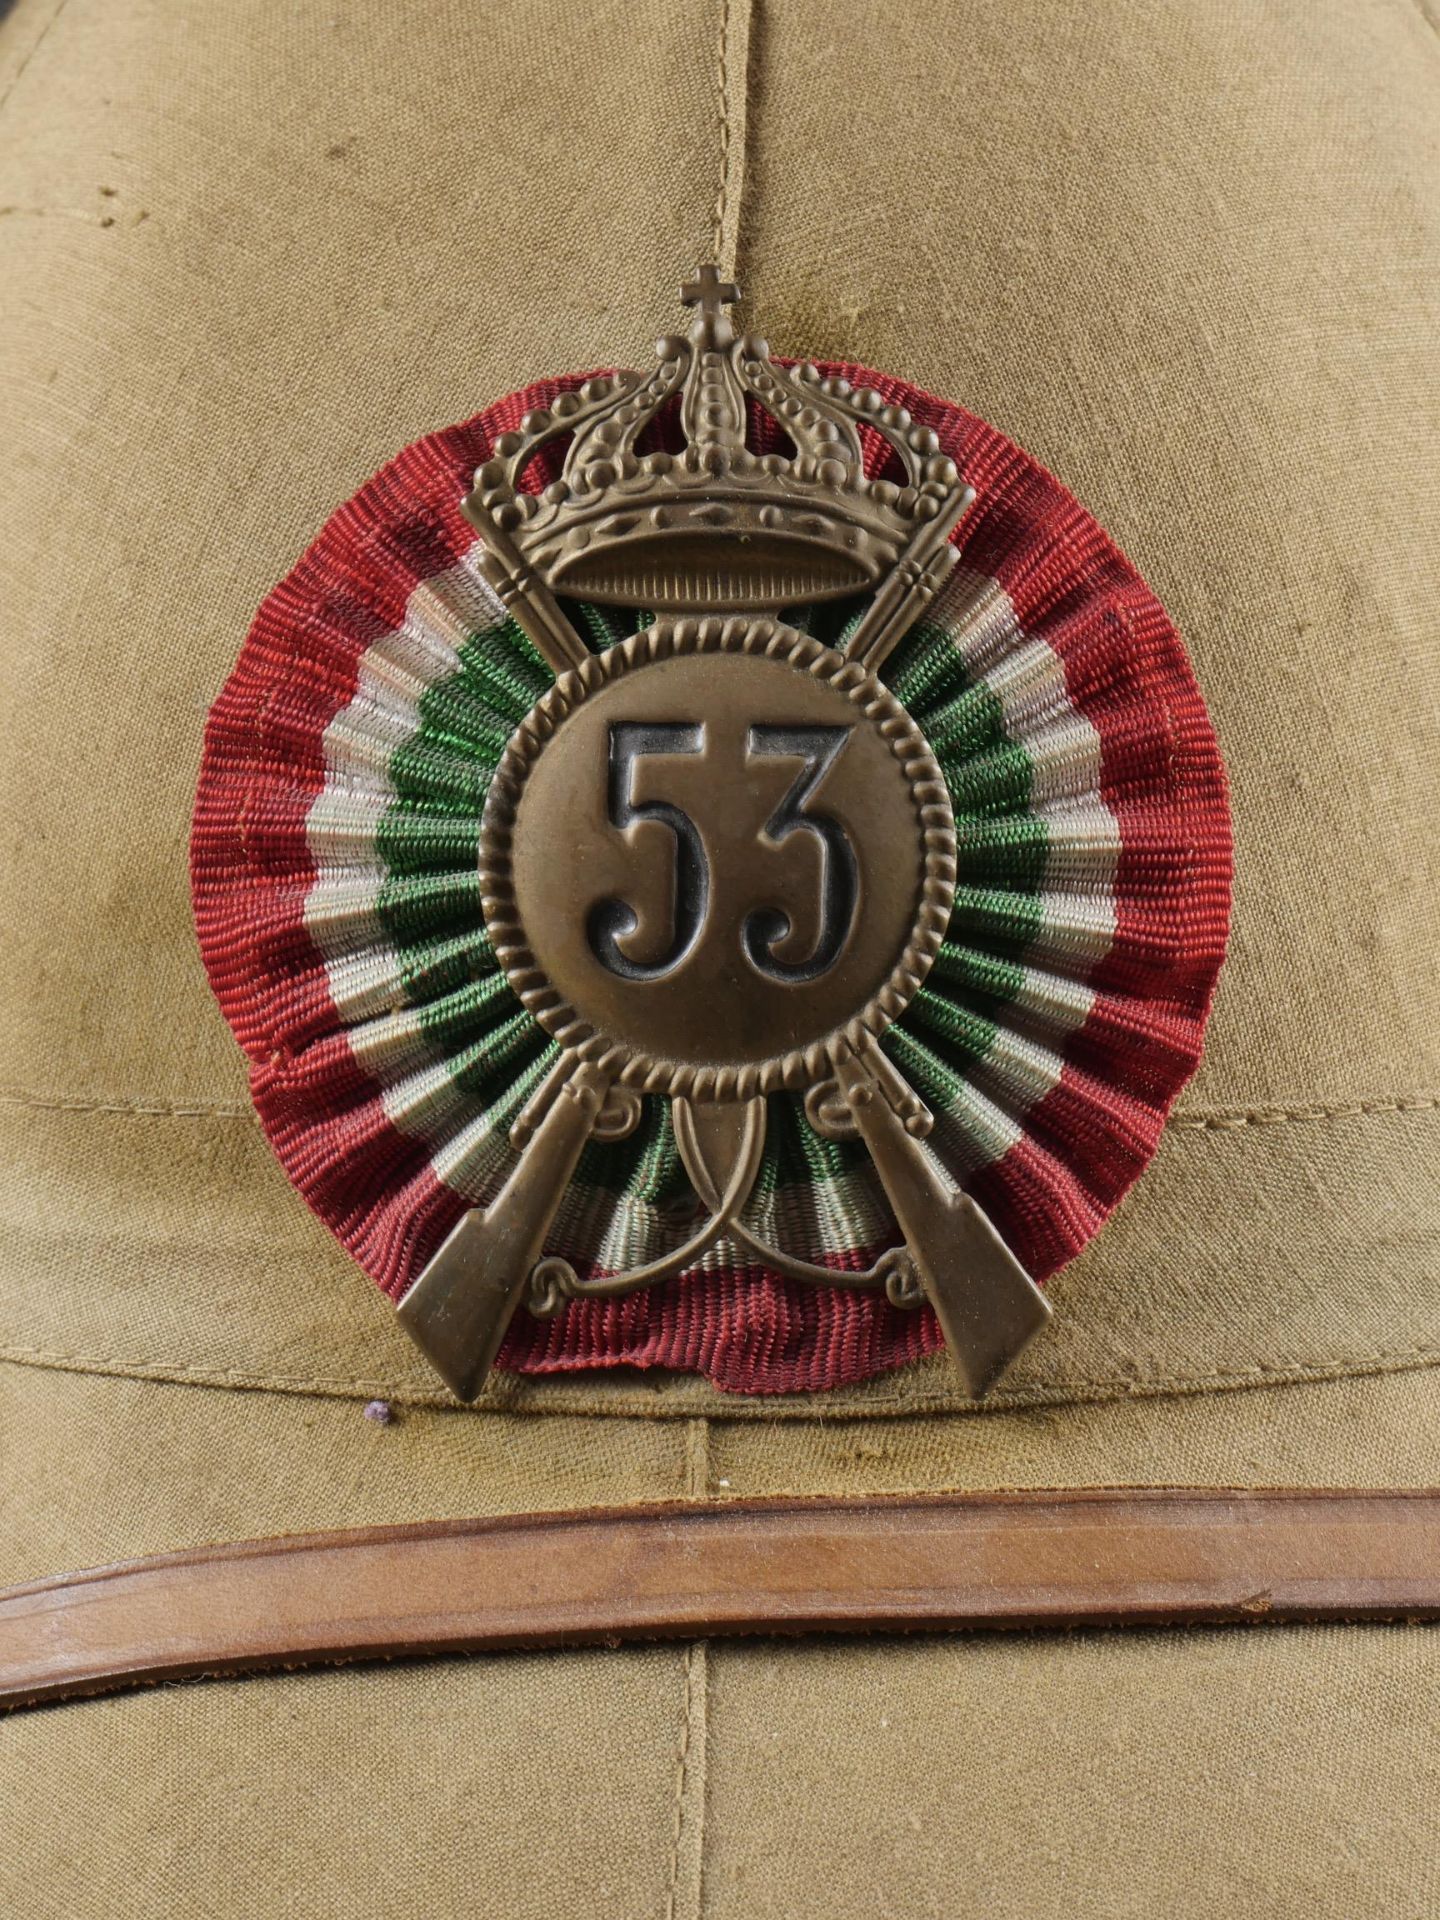 Casque tropicale du 53eme Regiment dInfanterie. Tropical helmet of the 53rd Infantry Regiment. - Image 3 of 19